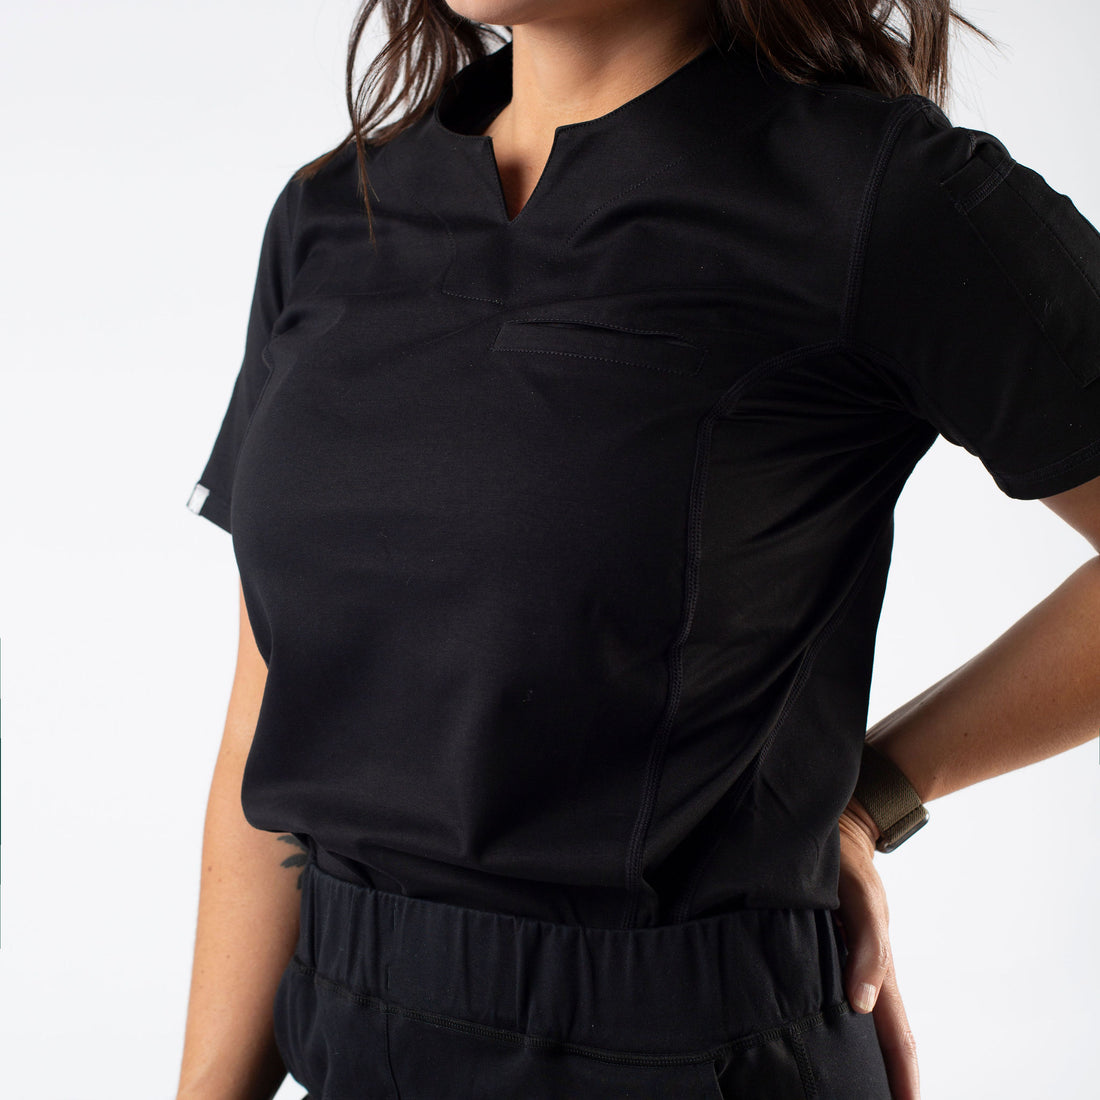 Buy Black Scrubs for Women Online at Best Prices – Knya